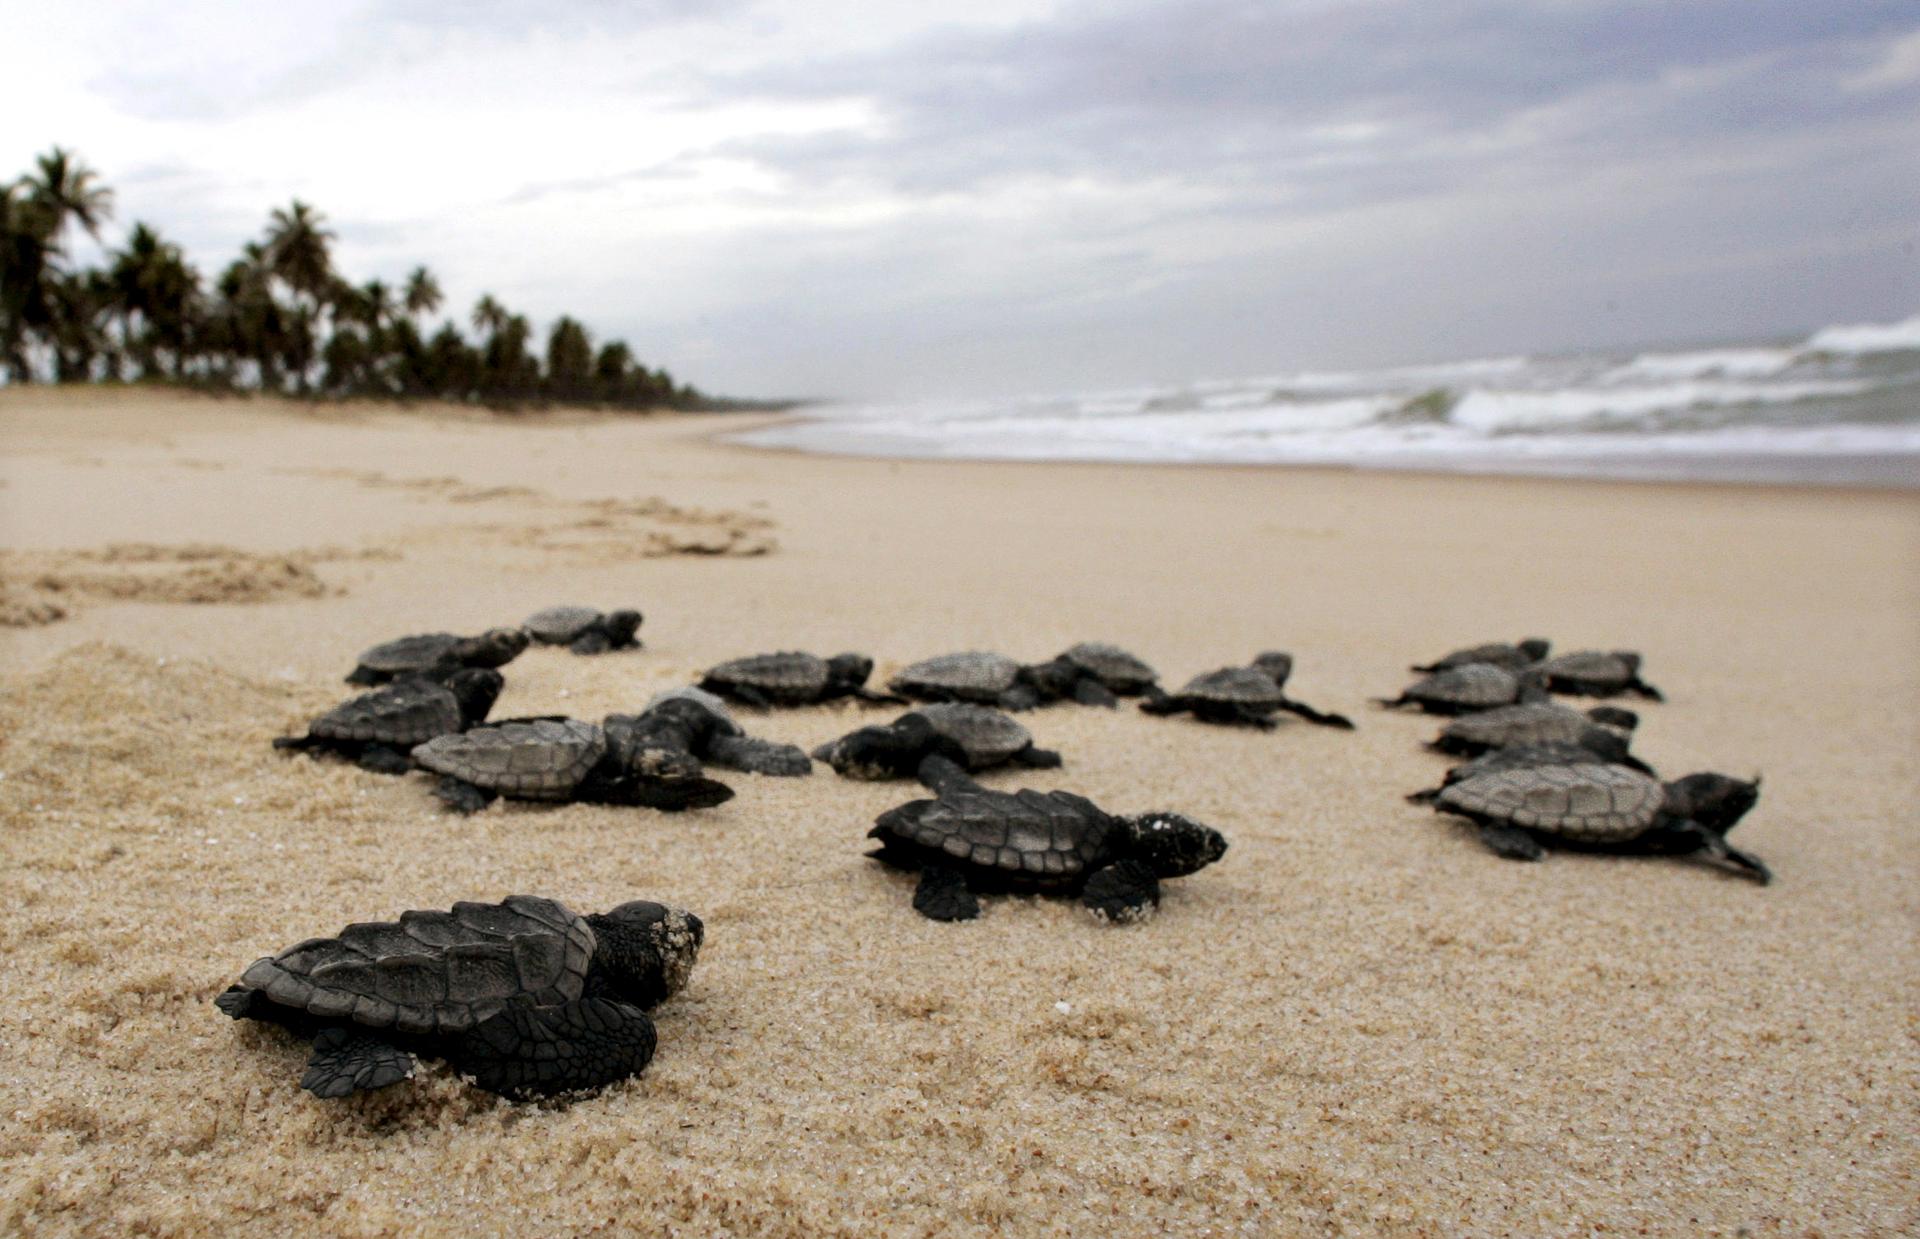 New born sea turtles make their way across a beach to the ocean.